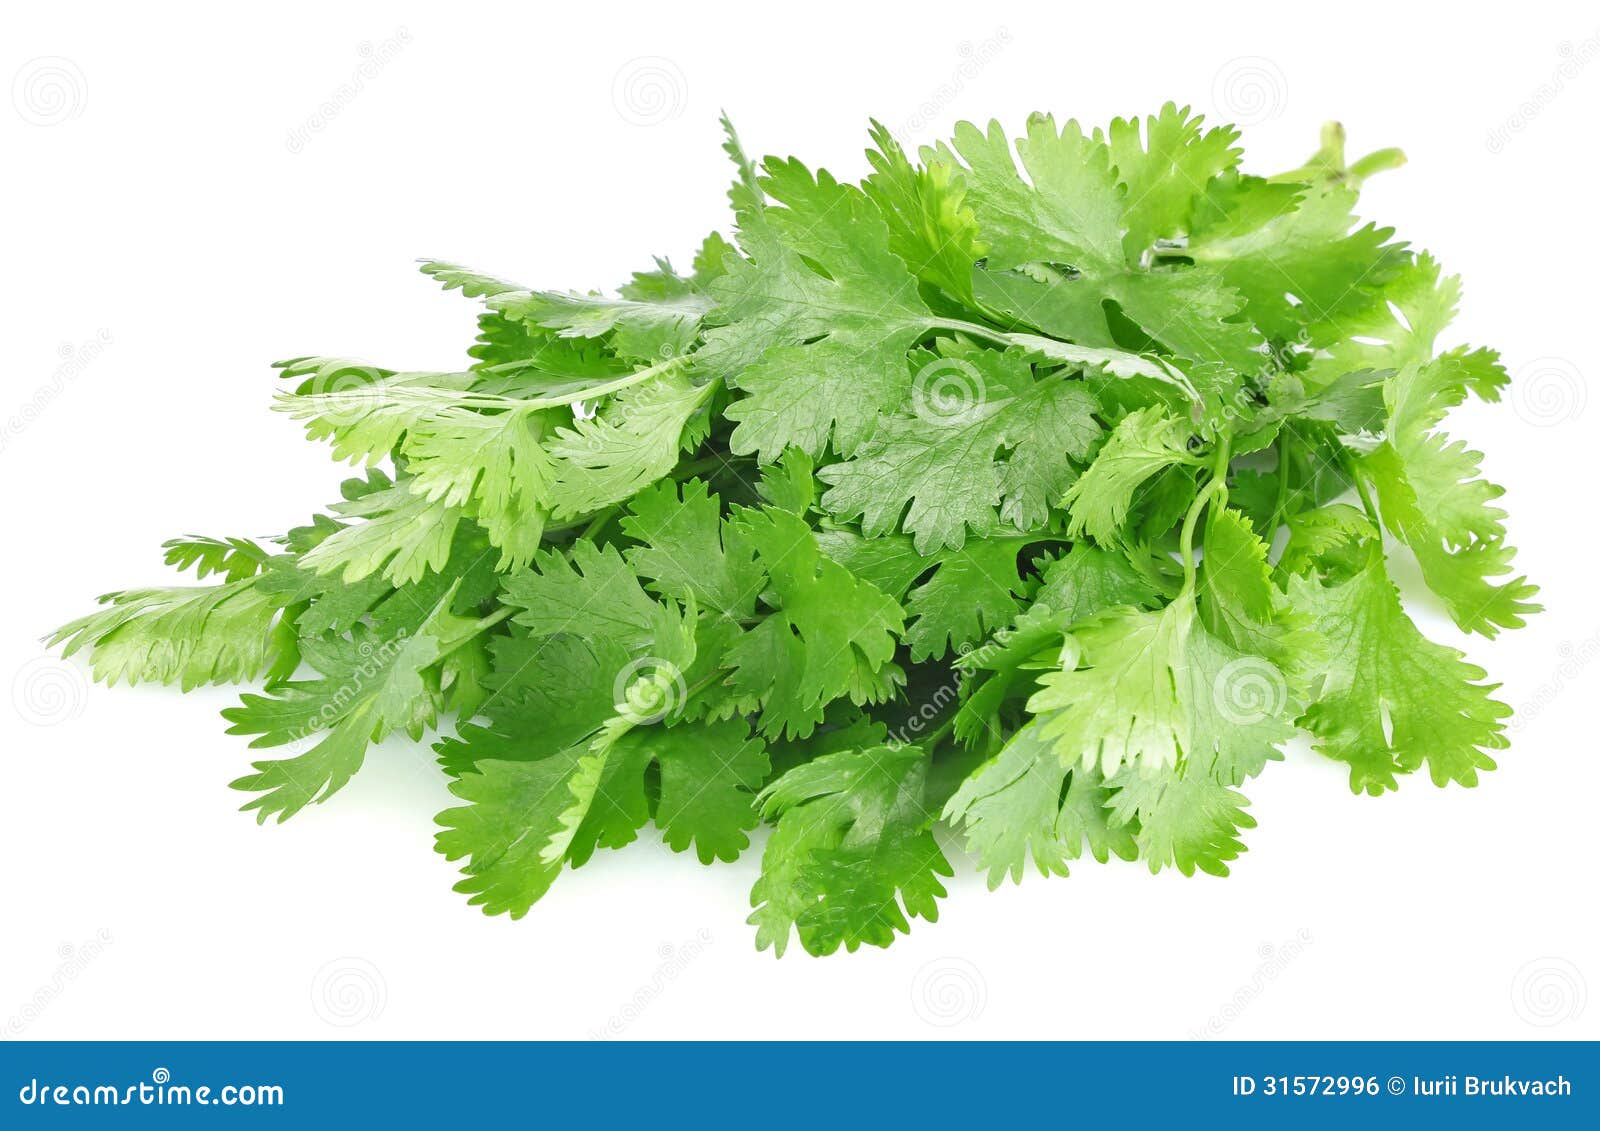 fresh leaves of cilantro